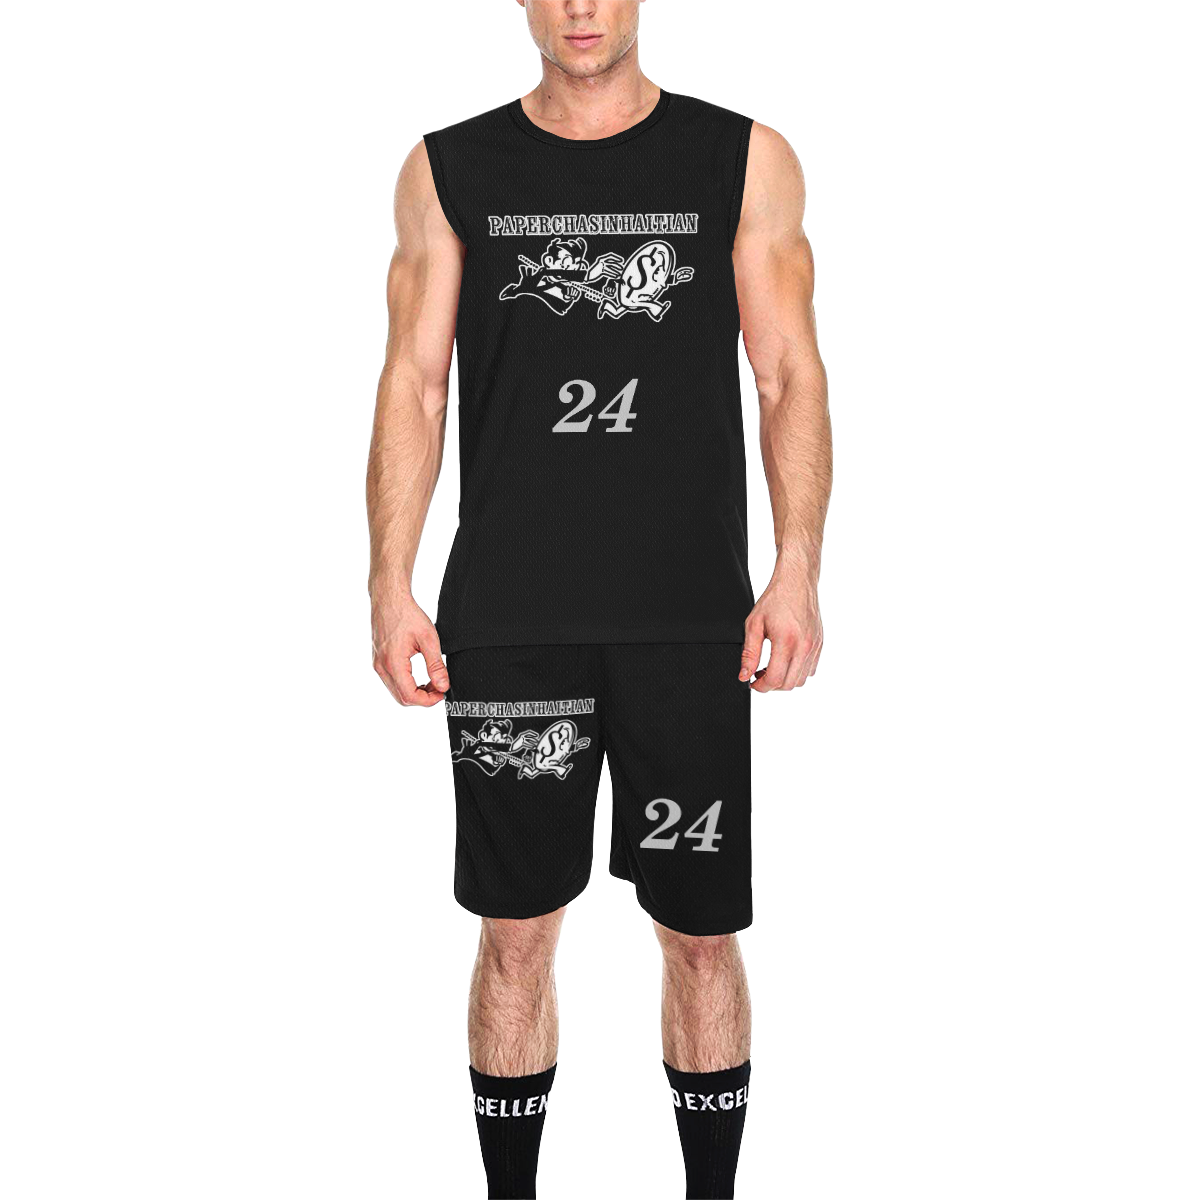 PCH 24 Warm ups All Over Print Basketball Uniform